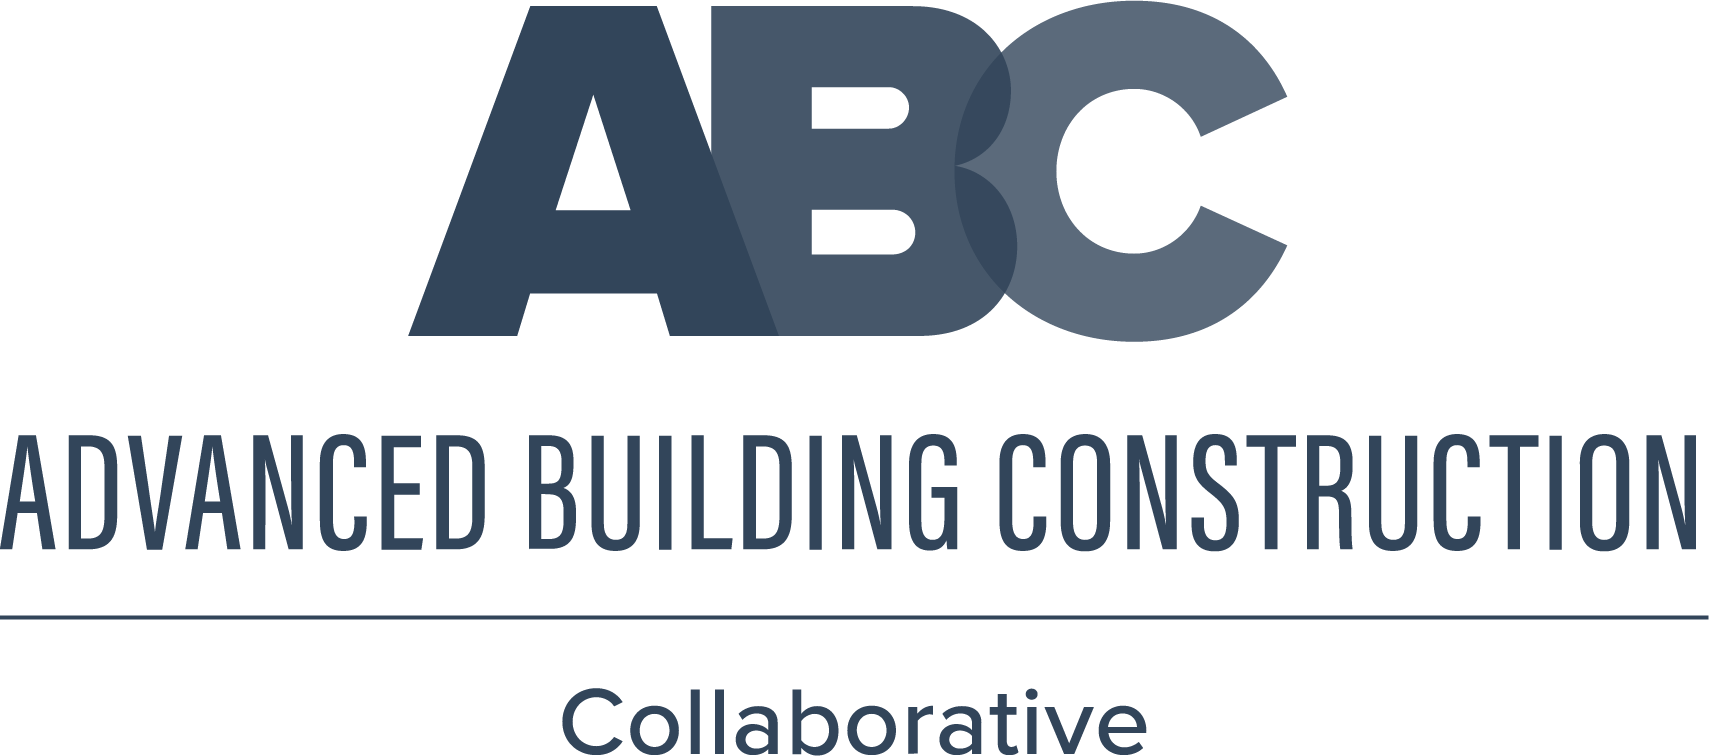 logo-ABC-blue